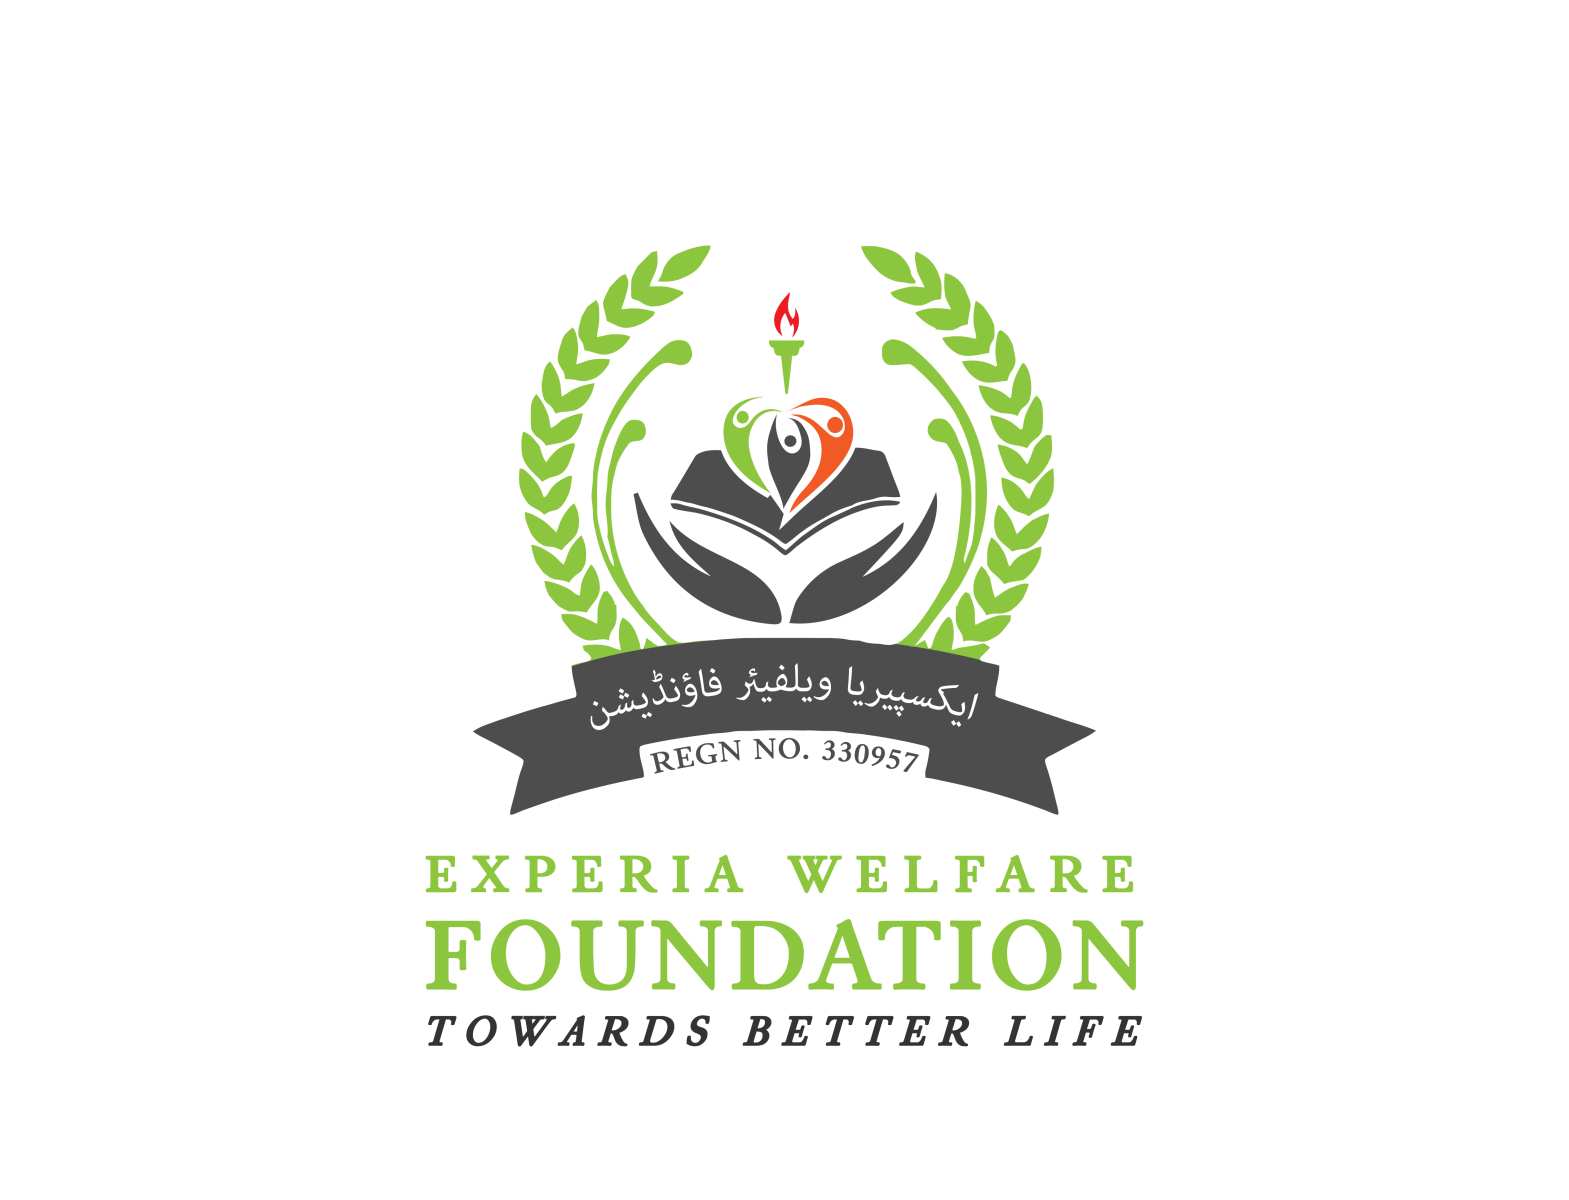 Child Welfare Foundation Logo | BrandCrowd Logo Maker